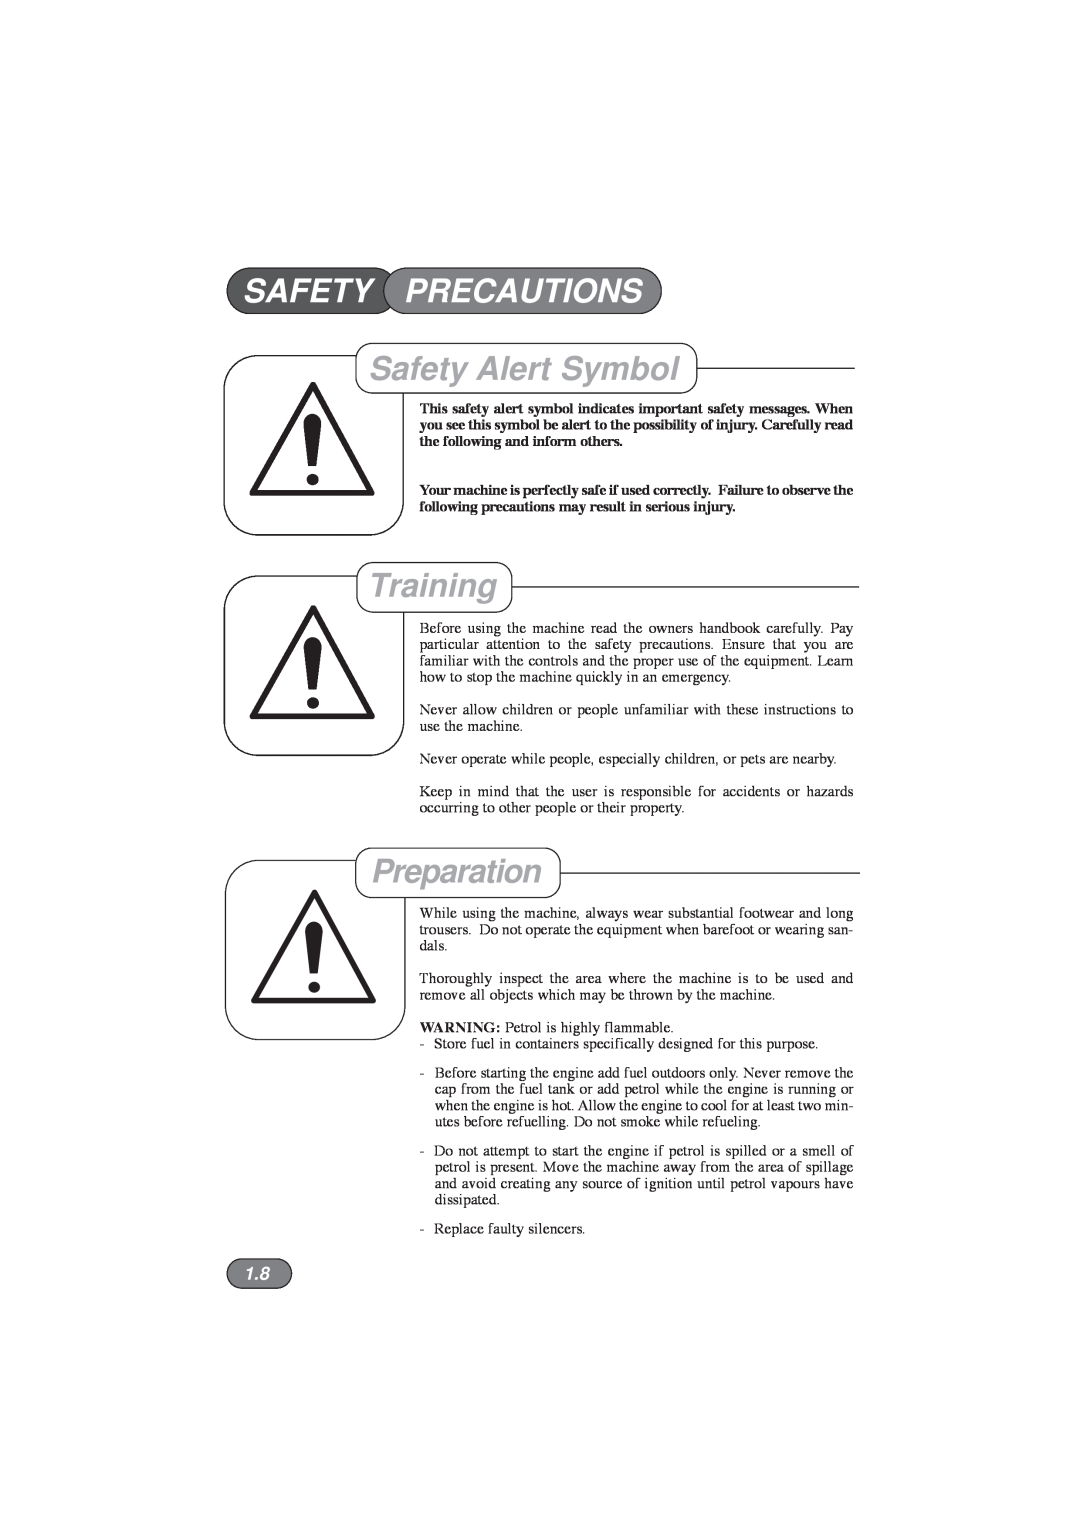 Hayter Mowers 185E XR16, 184E XR44 manual Safety Precautions, Safety Alert Symbol, Training, Preparation 